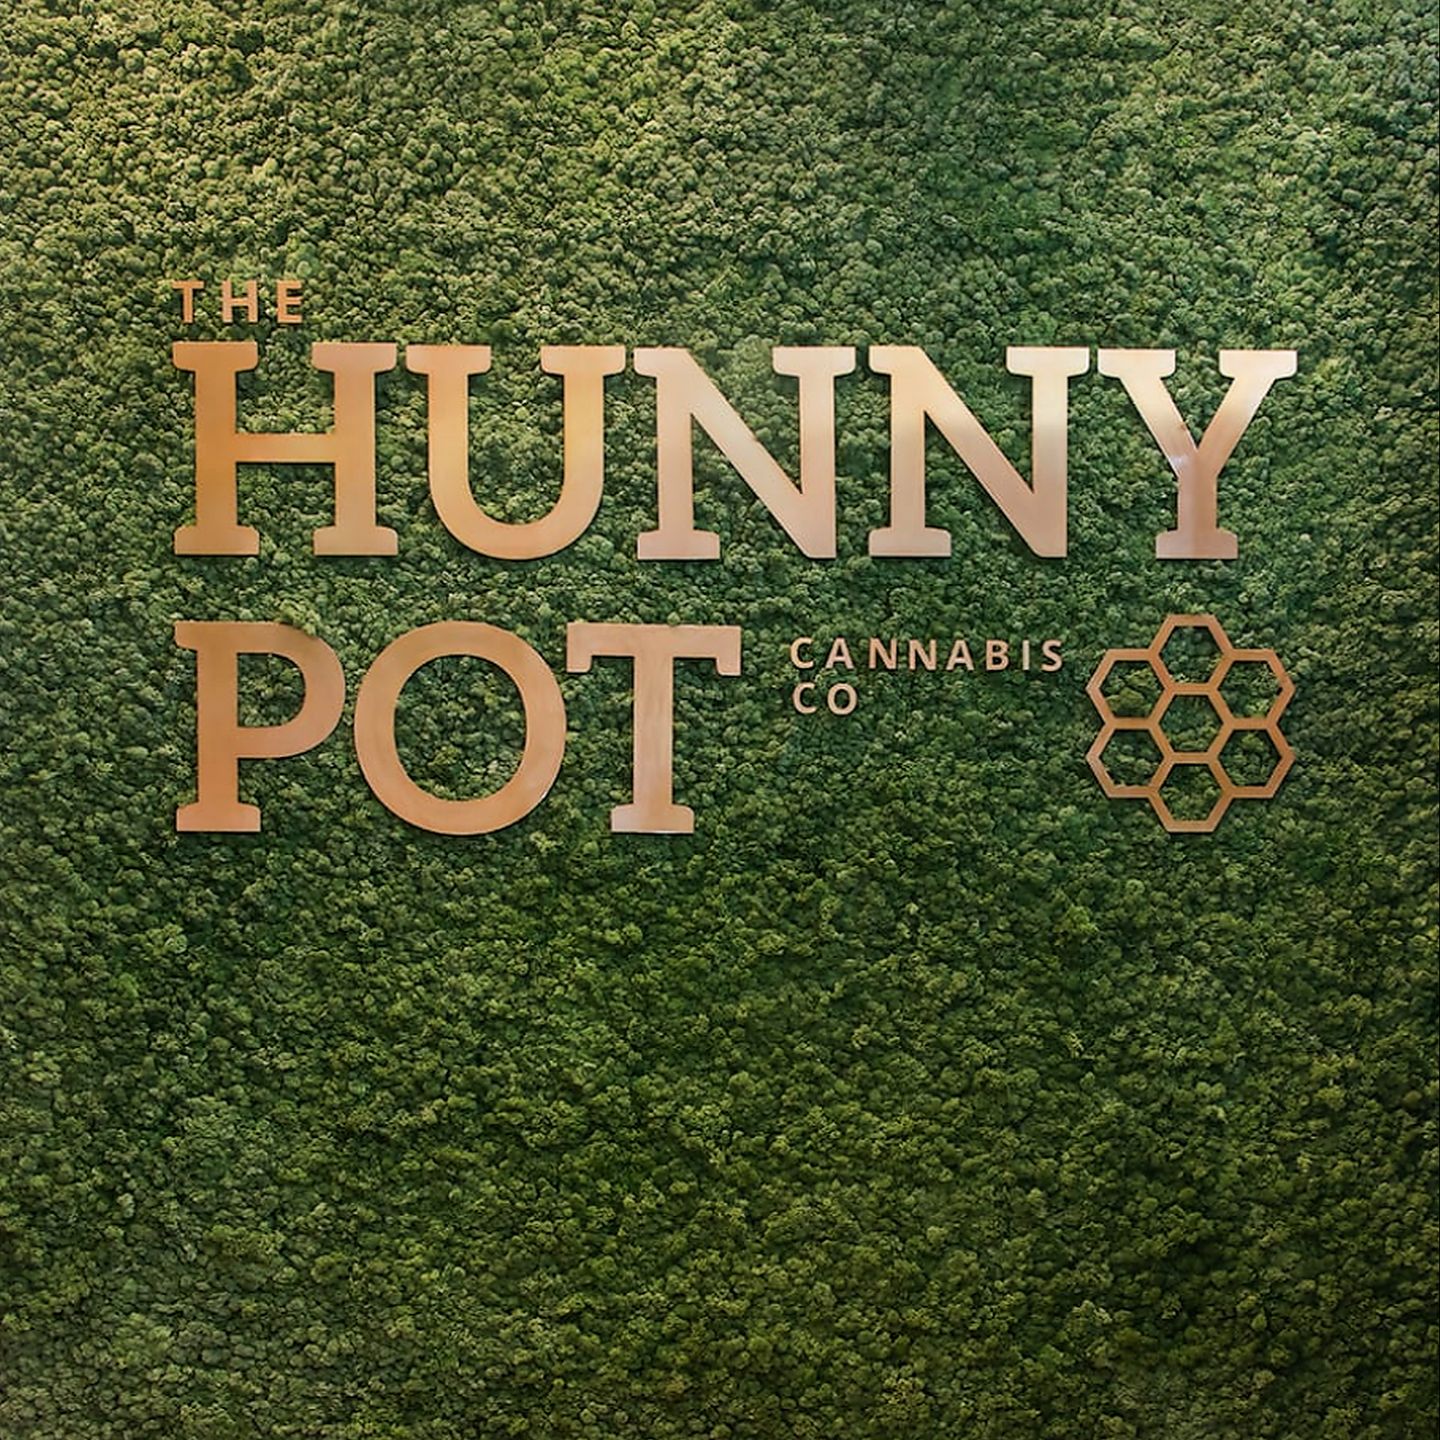 store photos The Hunny Pot Cannabis Co - Welland Ave